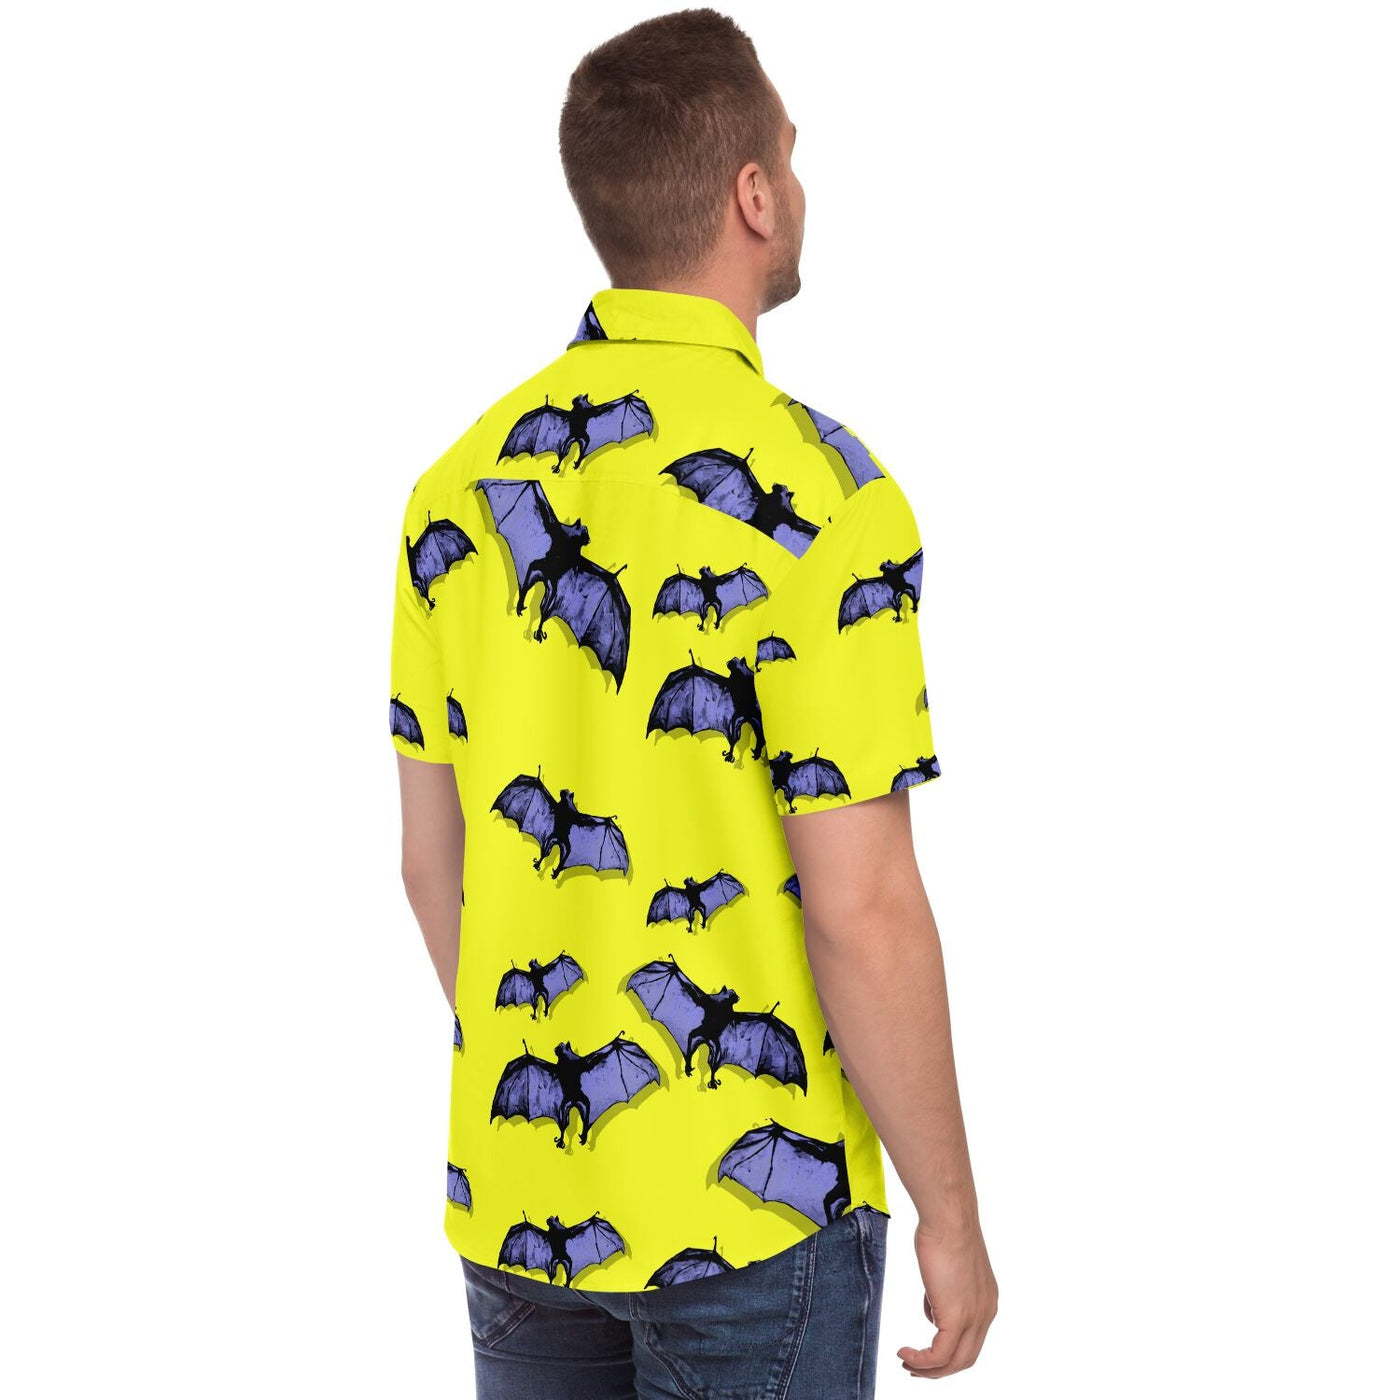 Flying Bats - Van Gogh Tribute | Art Freak Pop Short Sleeves Shirt